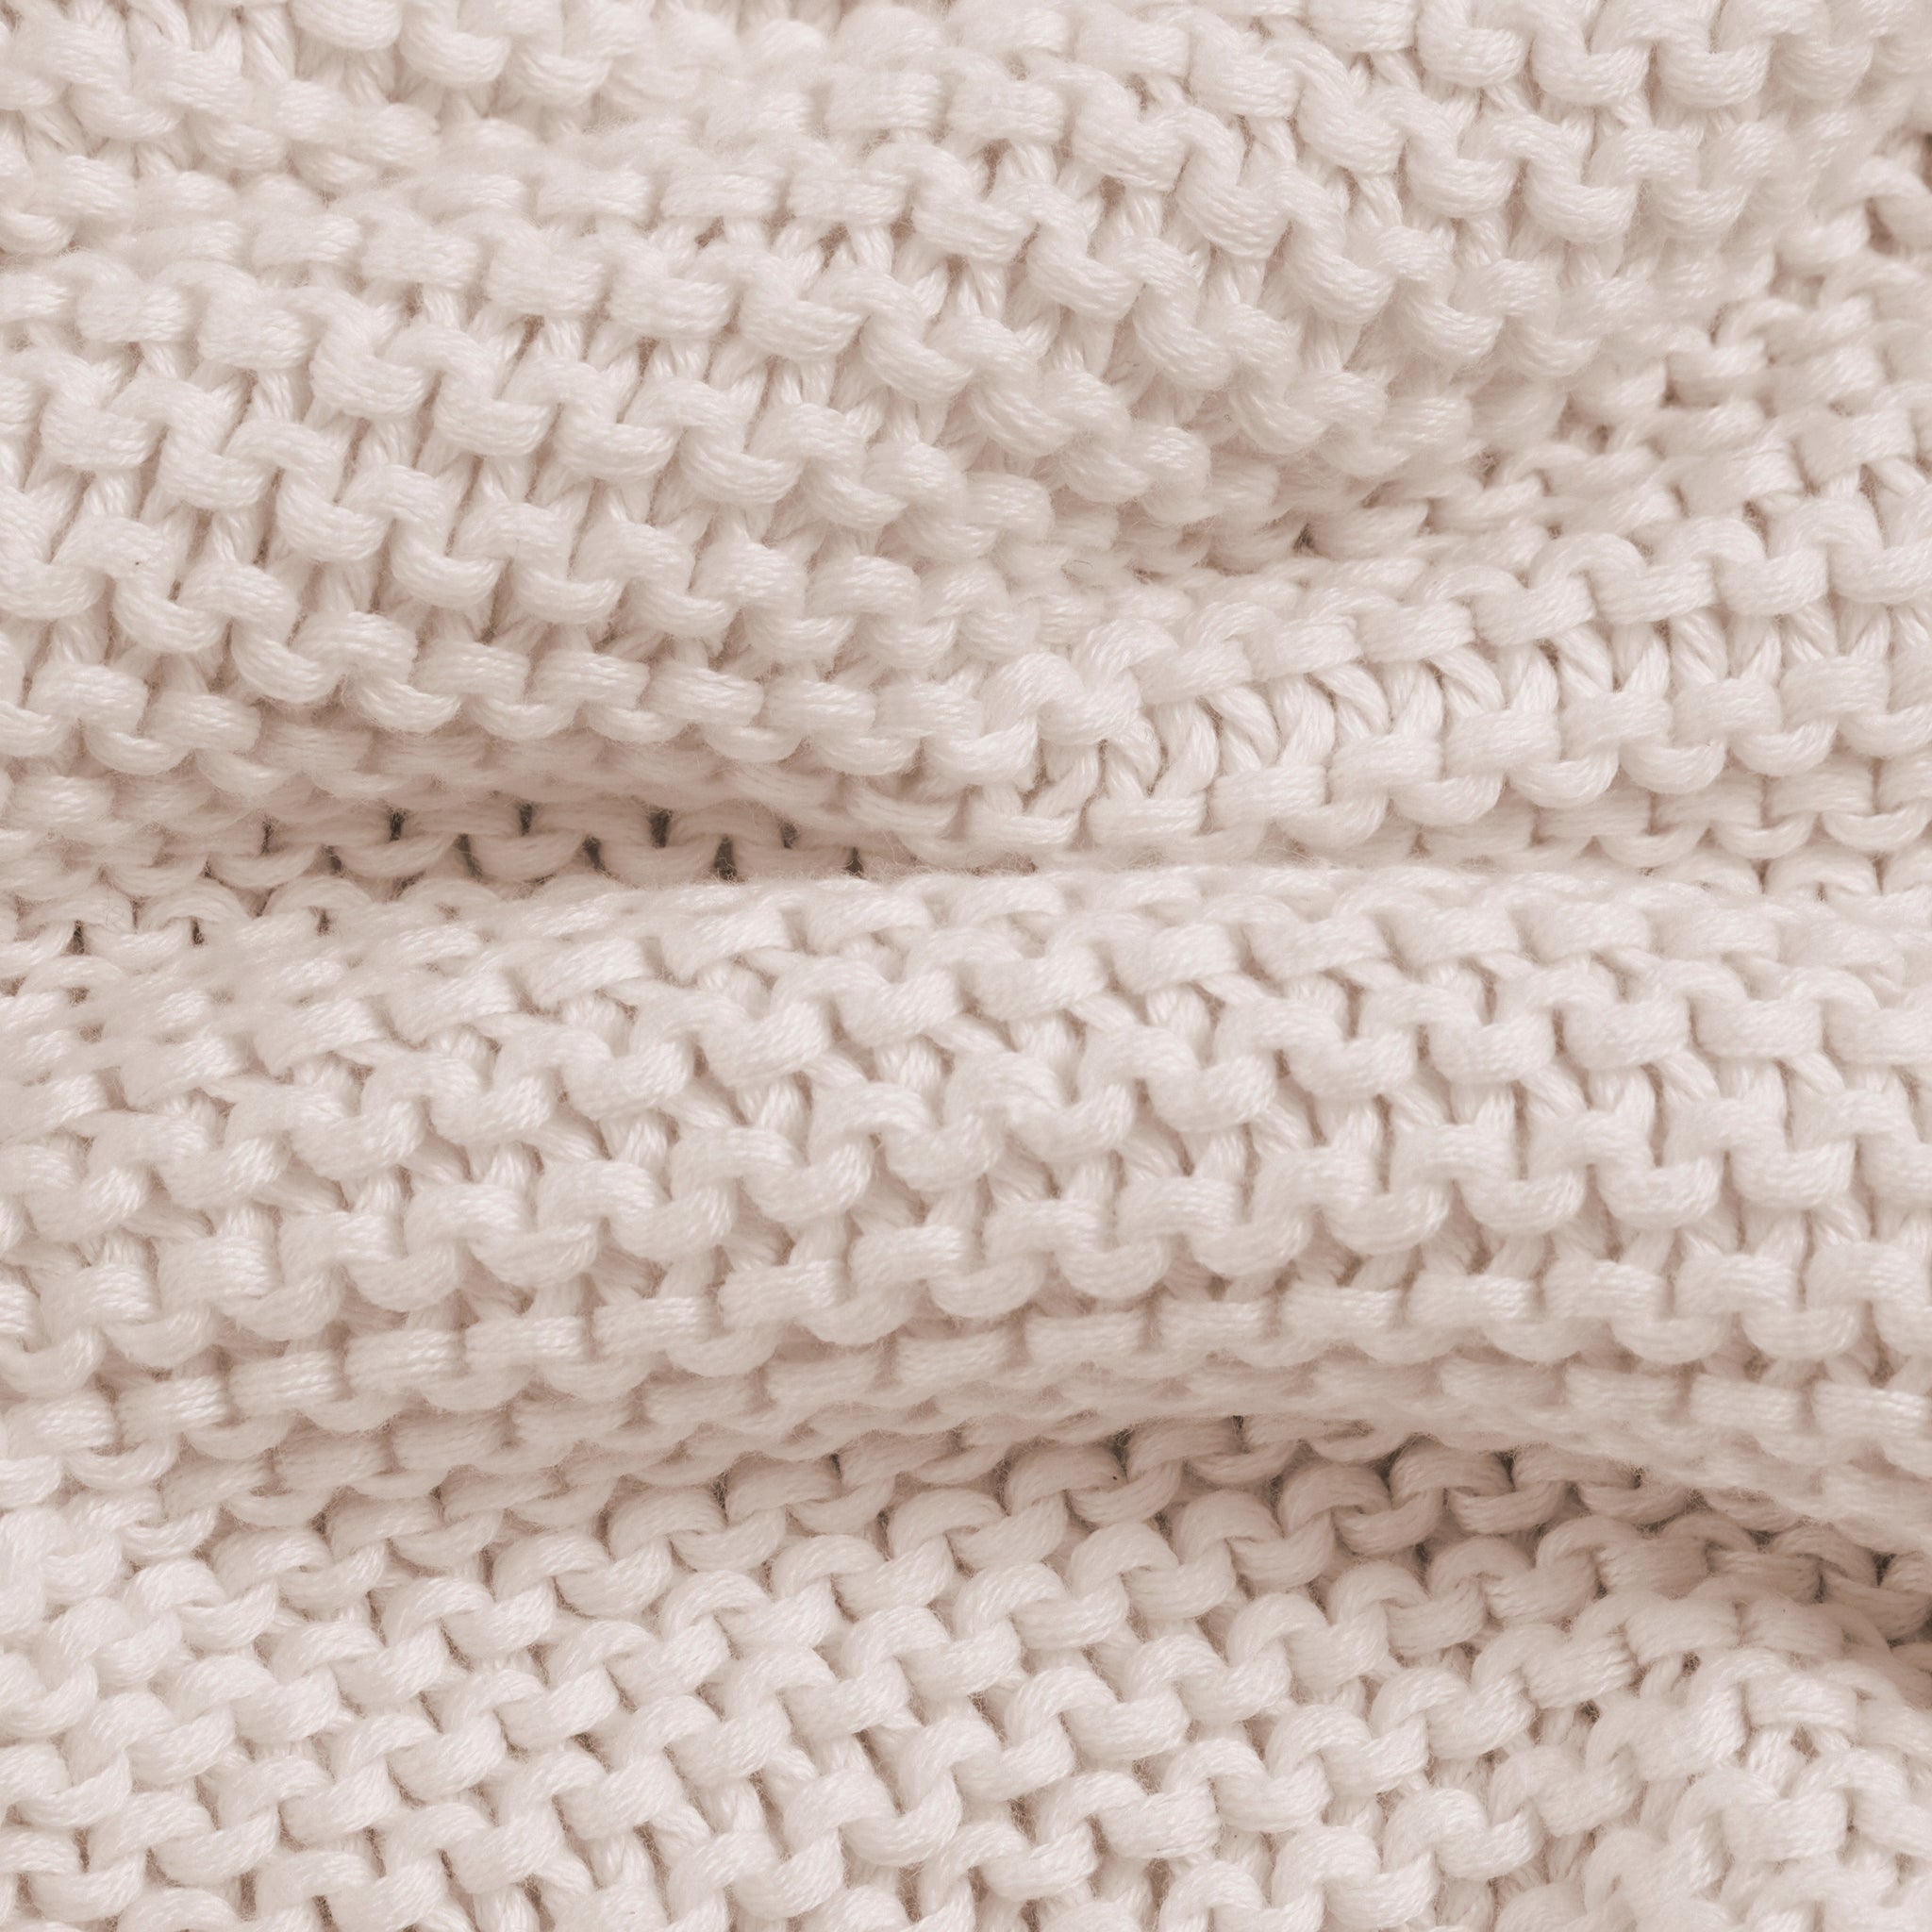 Chunky Knit Throw Blanket - Nora Shell - Makemake Organics